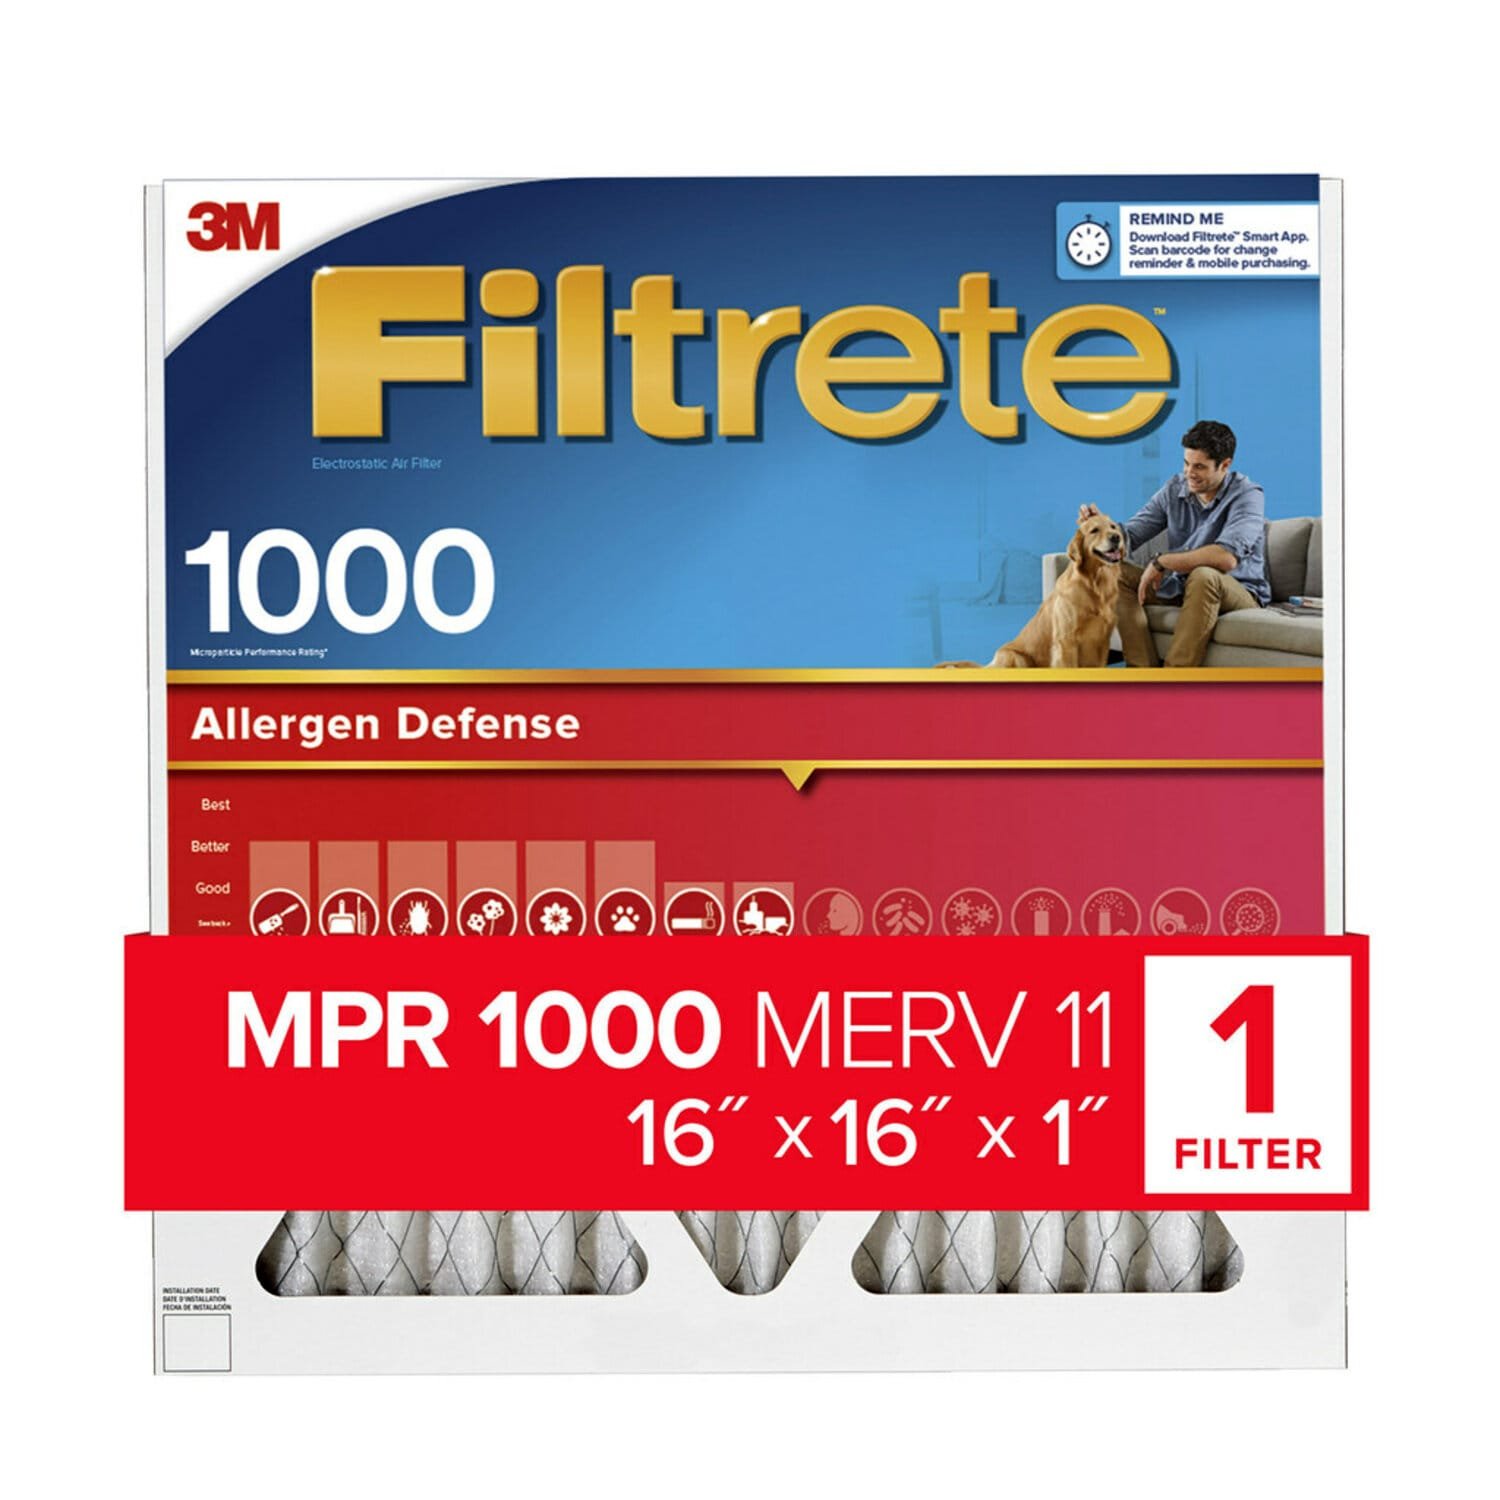 7100192557 - Filtrete Allergen Defense Air Filter, 1000 MPR, AL15-4, 25 in x 25 in x
1 in (63,5 cm x 63,5 cm x 2,5 cm)